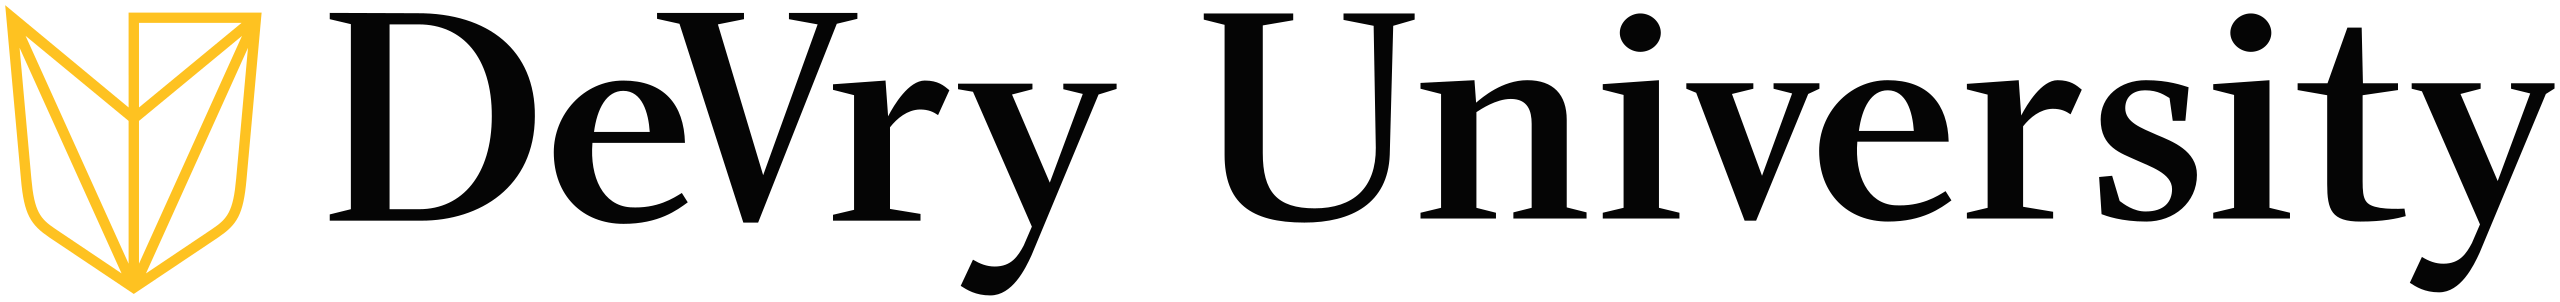 De-Vry-University logo